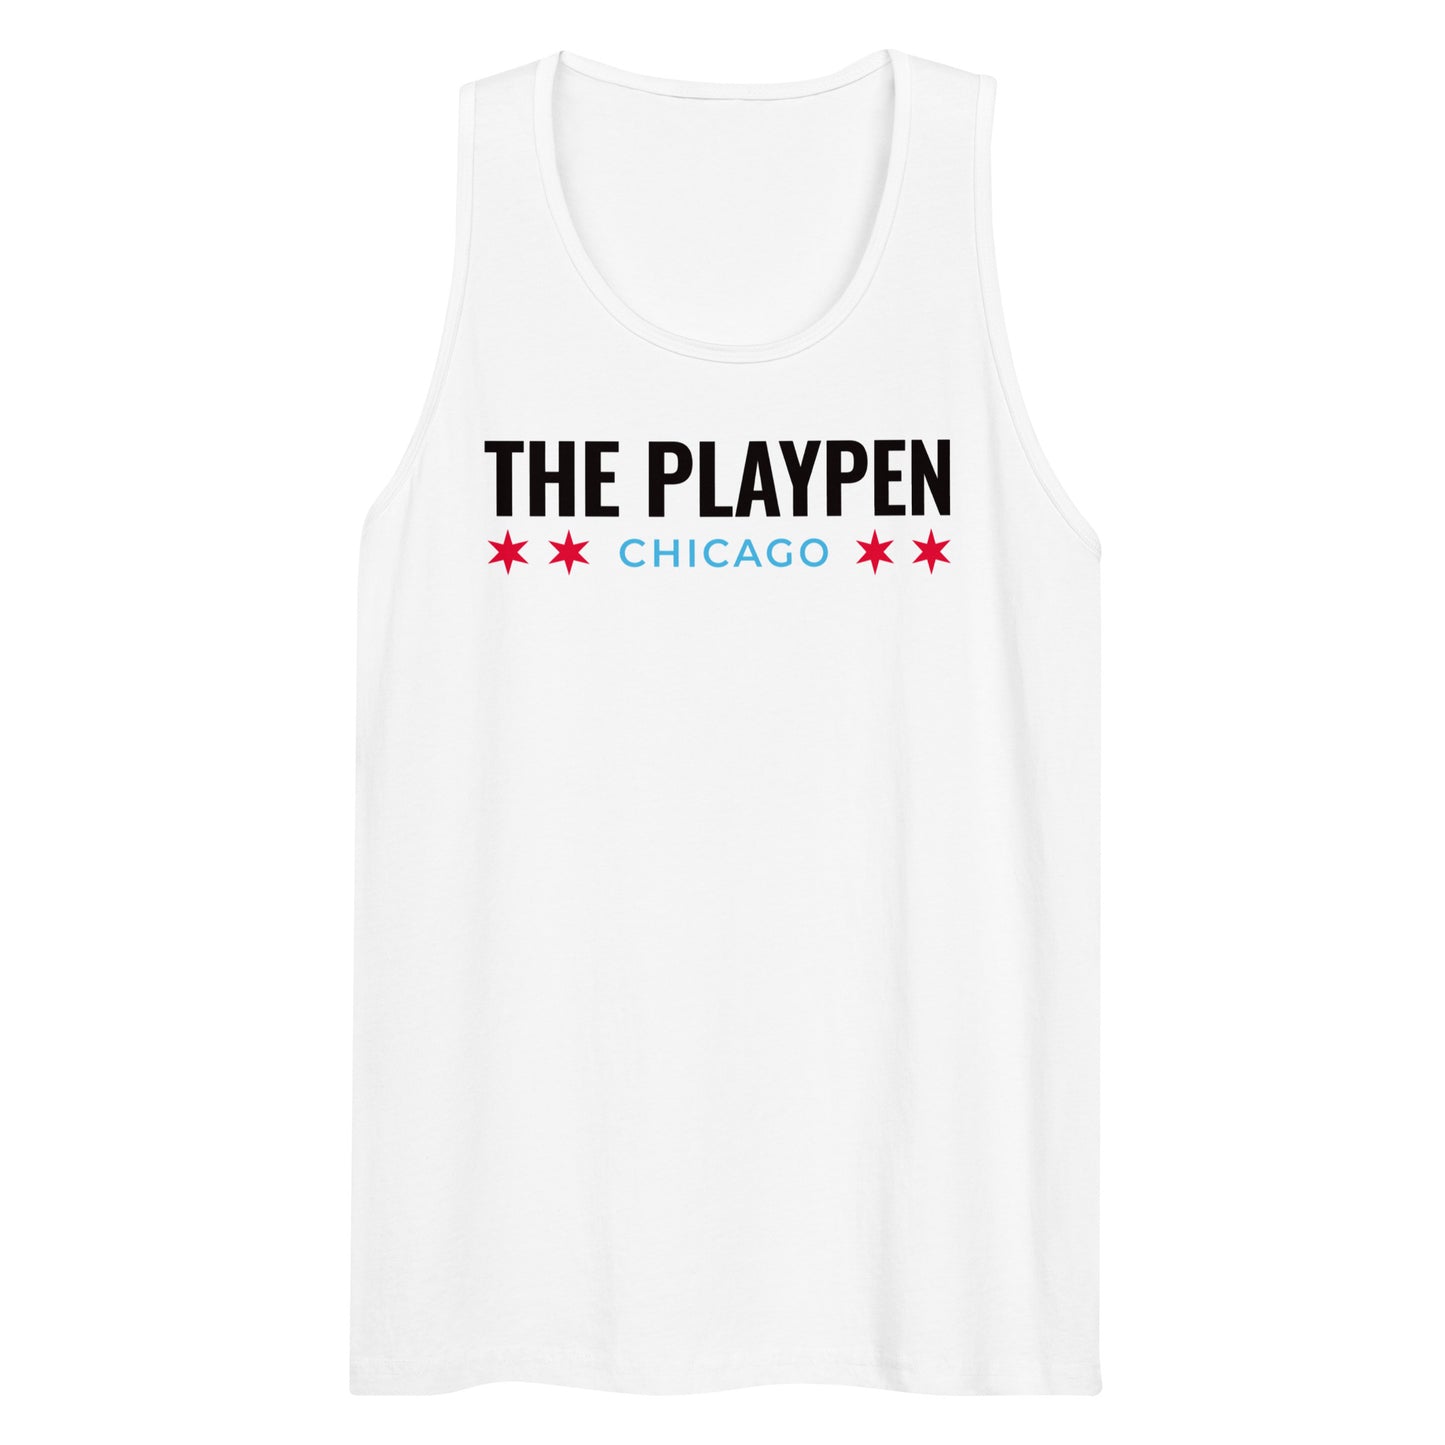 The Playpen Chicago - White